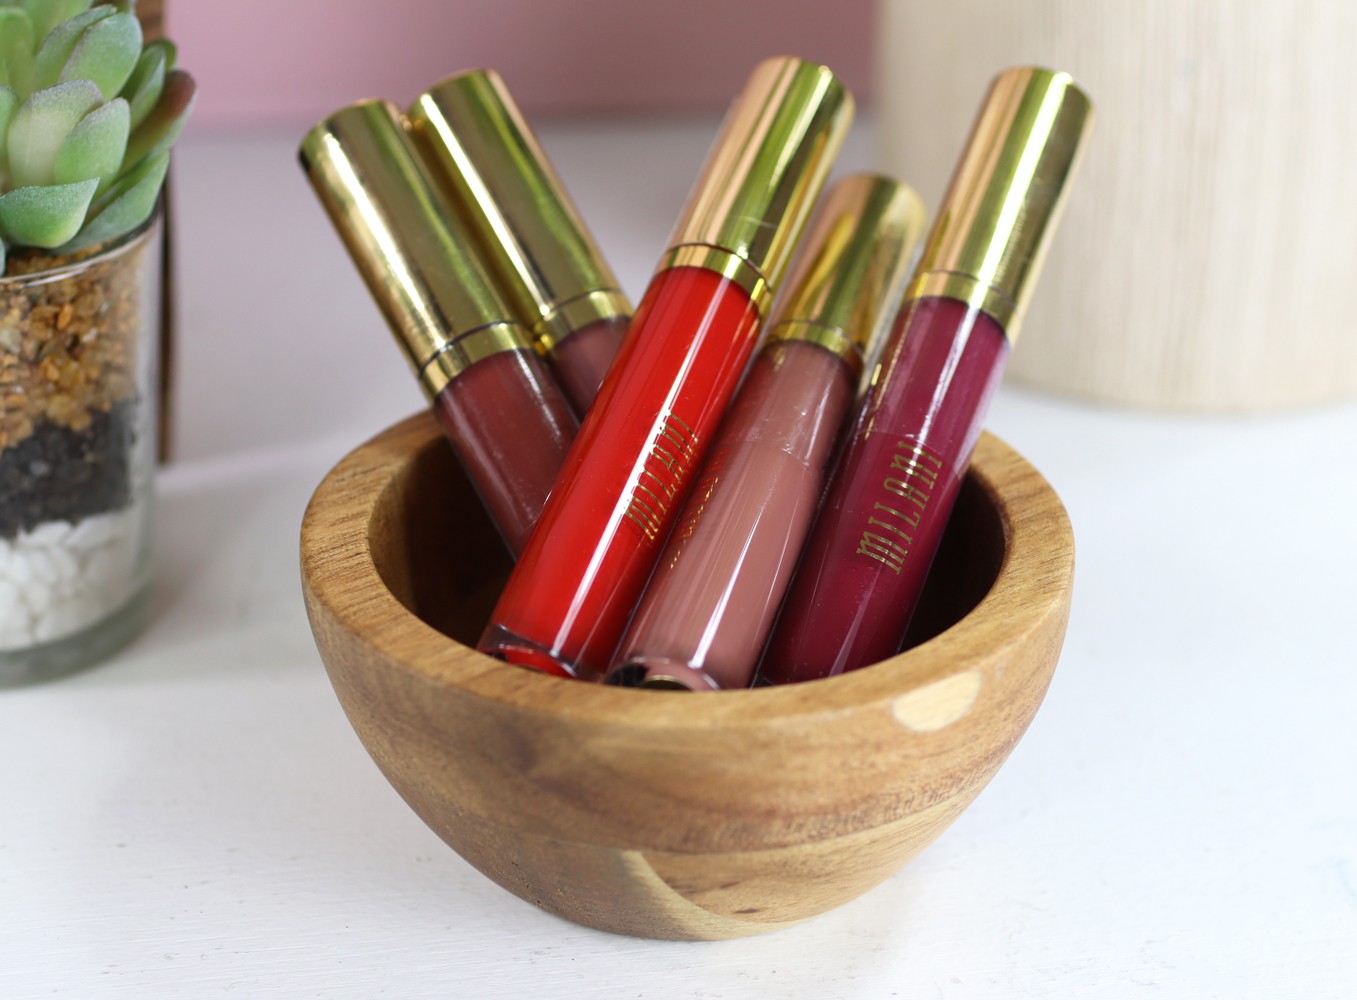 Milani Amore Shine Liquid Lipstick by cruelty free beauty blogger My Beauty Blogger